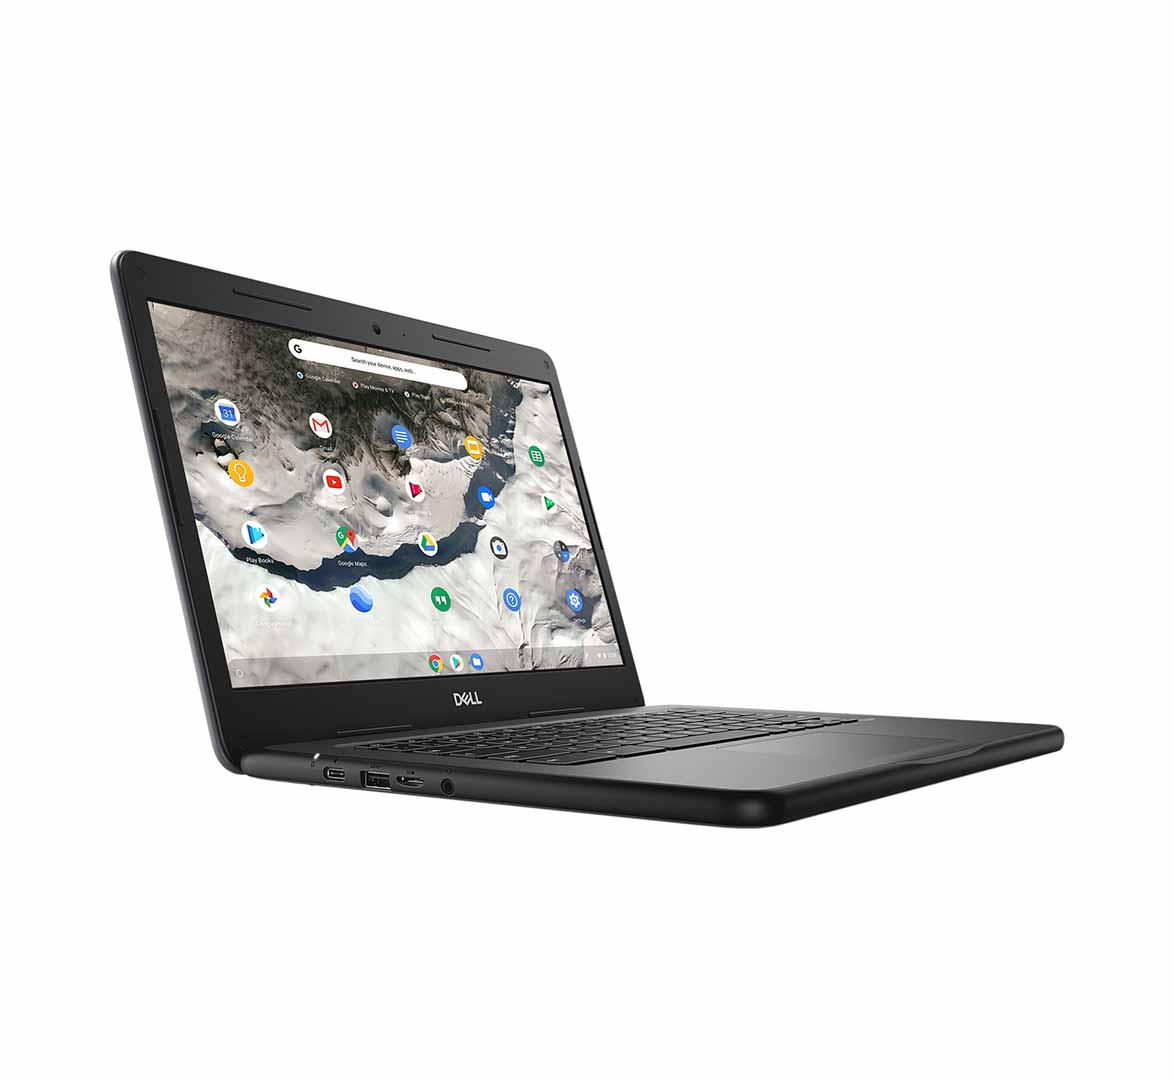 Dell Chromebook 14 3400 Business Laptop, Intel Celeron N Series CPU, 8GB DDR3 RAM, 64GB SSD, 14 inch Display, Windows 10 Pro, Refurbished Laptop